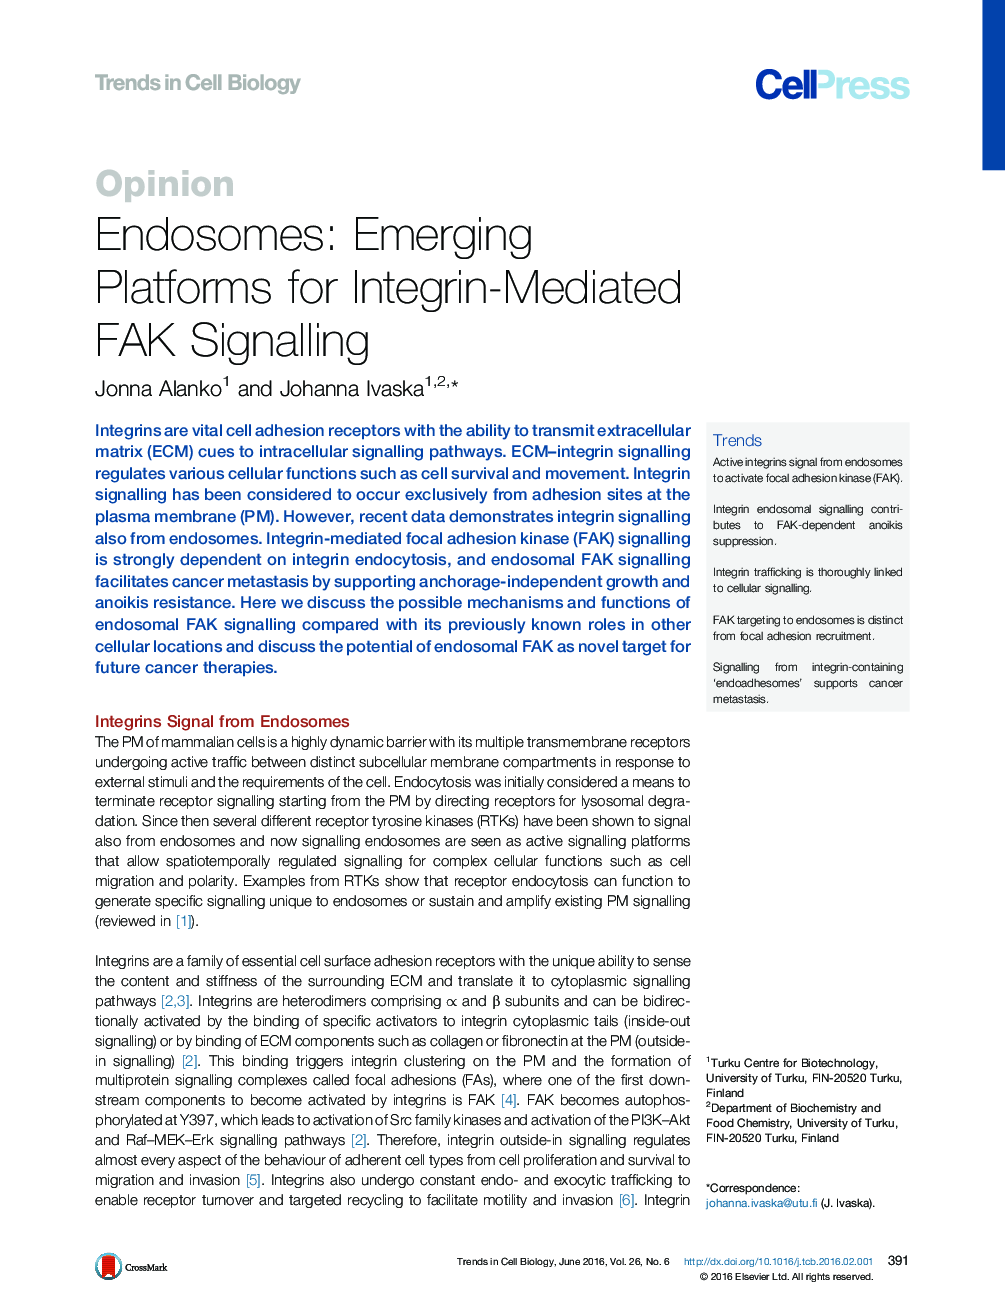 Endosomes: Emerging Platforms for Integrin-Mediated FAK Signalling